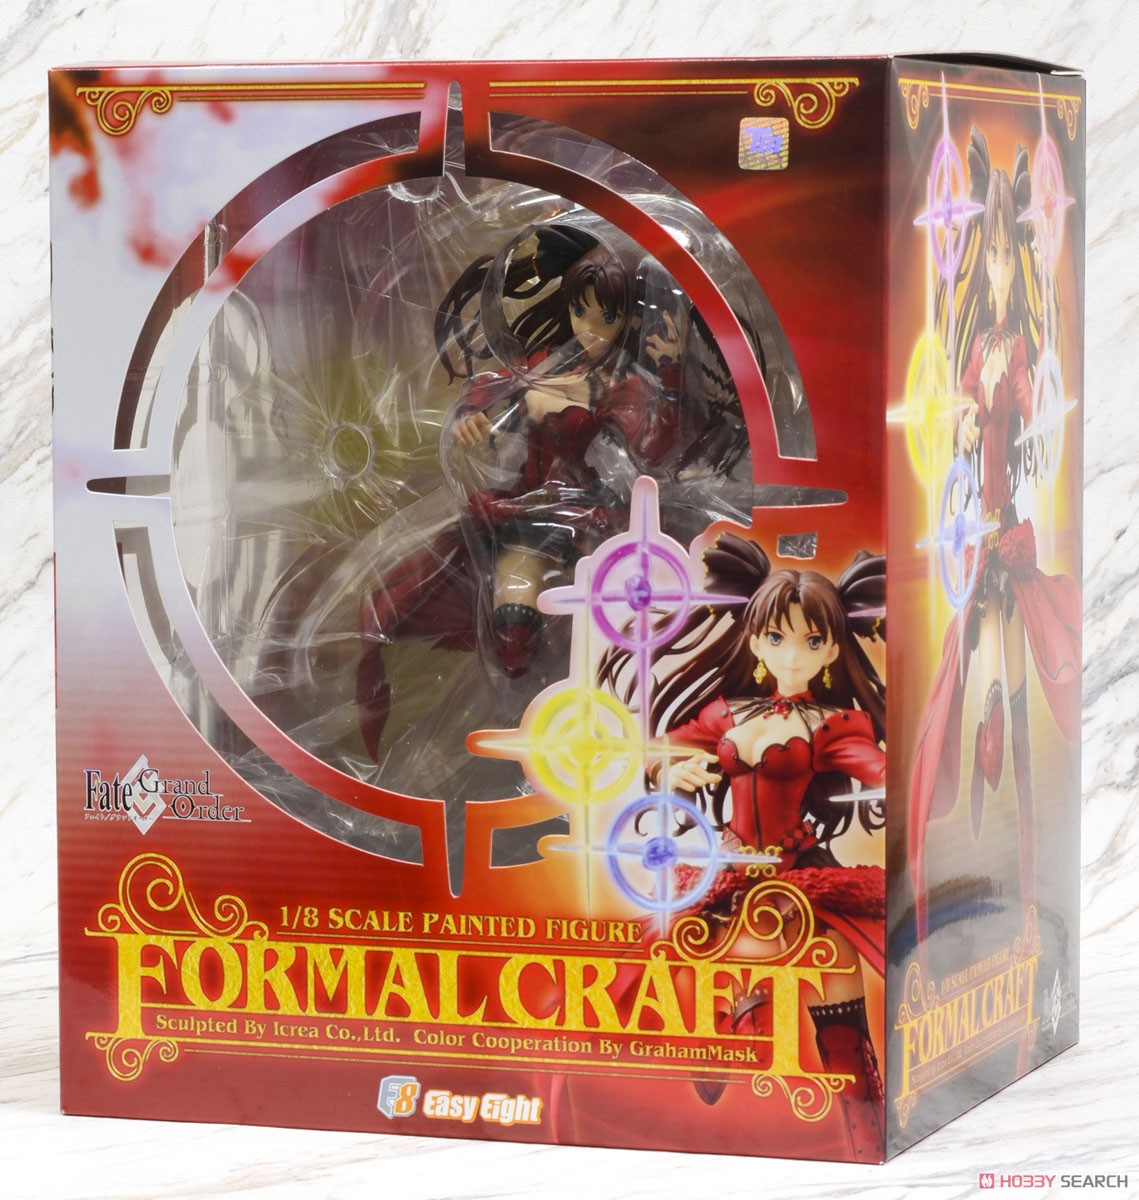 Formal Craft (PVC Figure) Package1